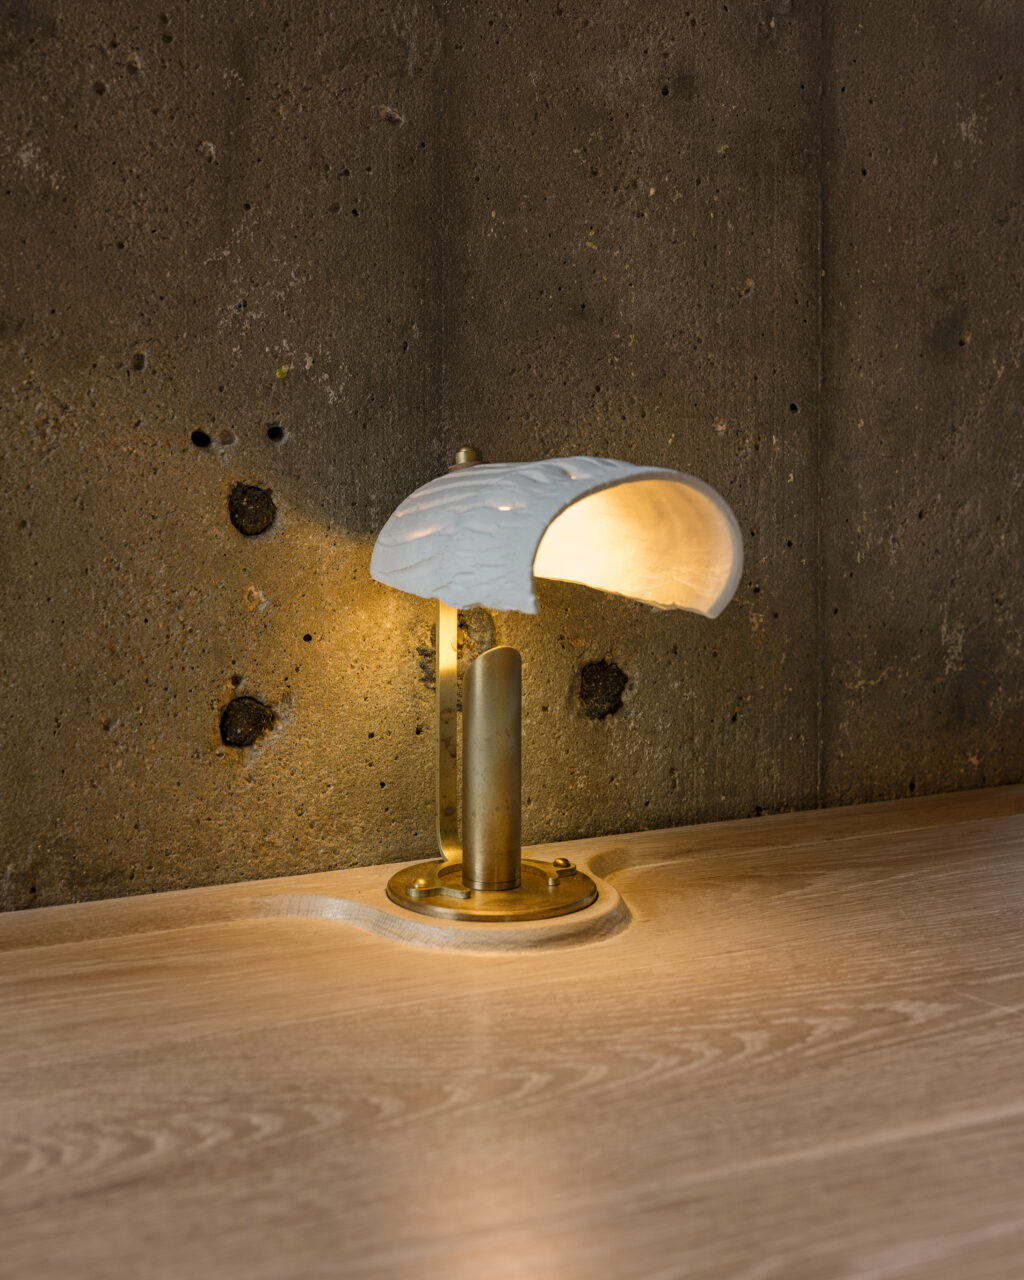 lamp on wood table